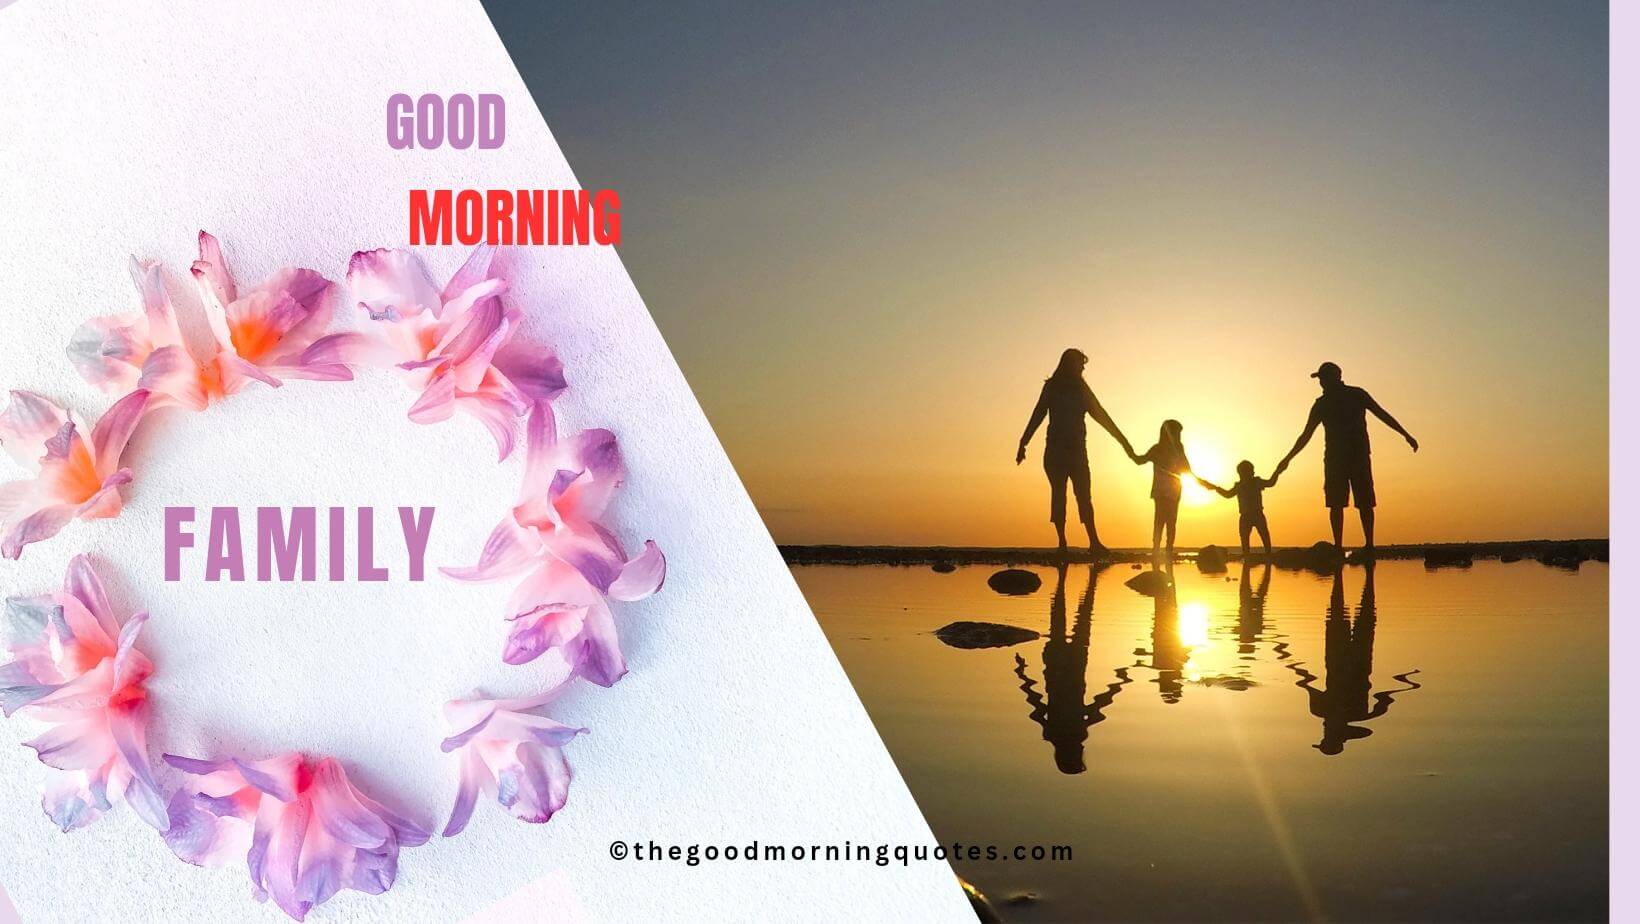 Good Morning Family Quotes in Hindi